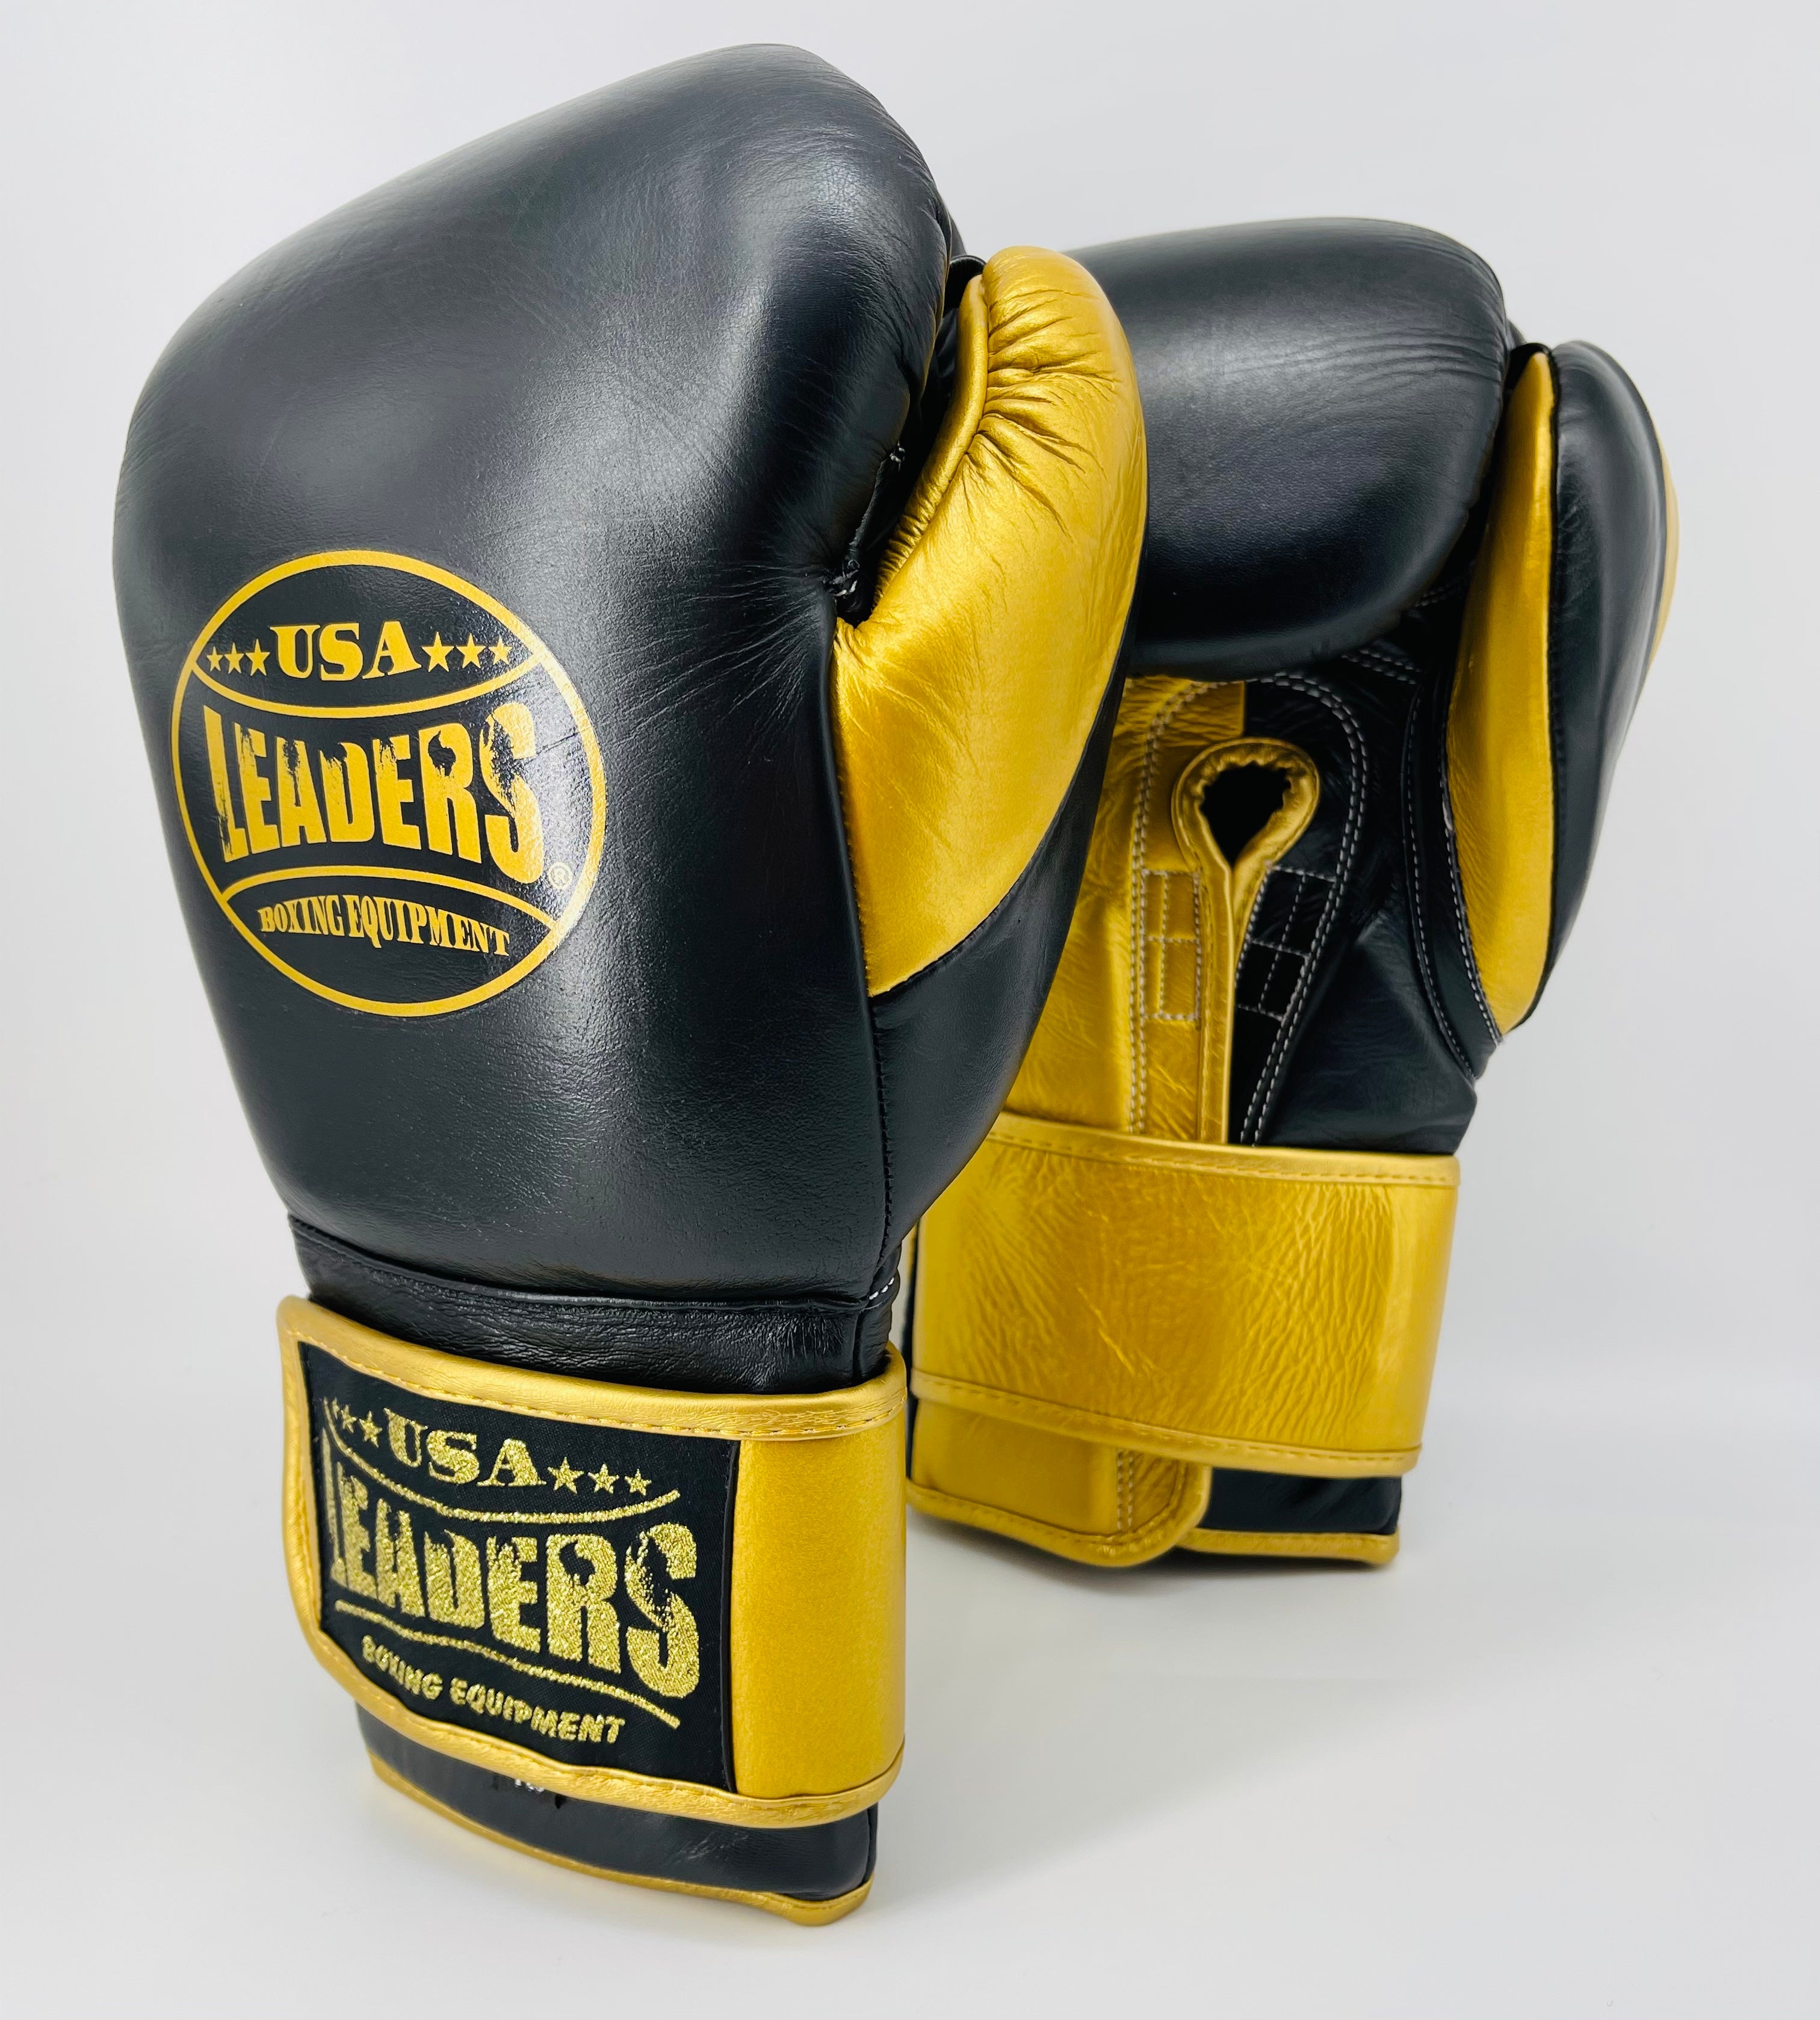 Buddha Bushwhacker Boxing Gloves Black-Gold